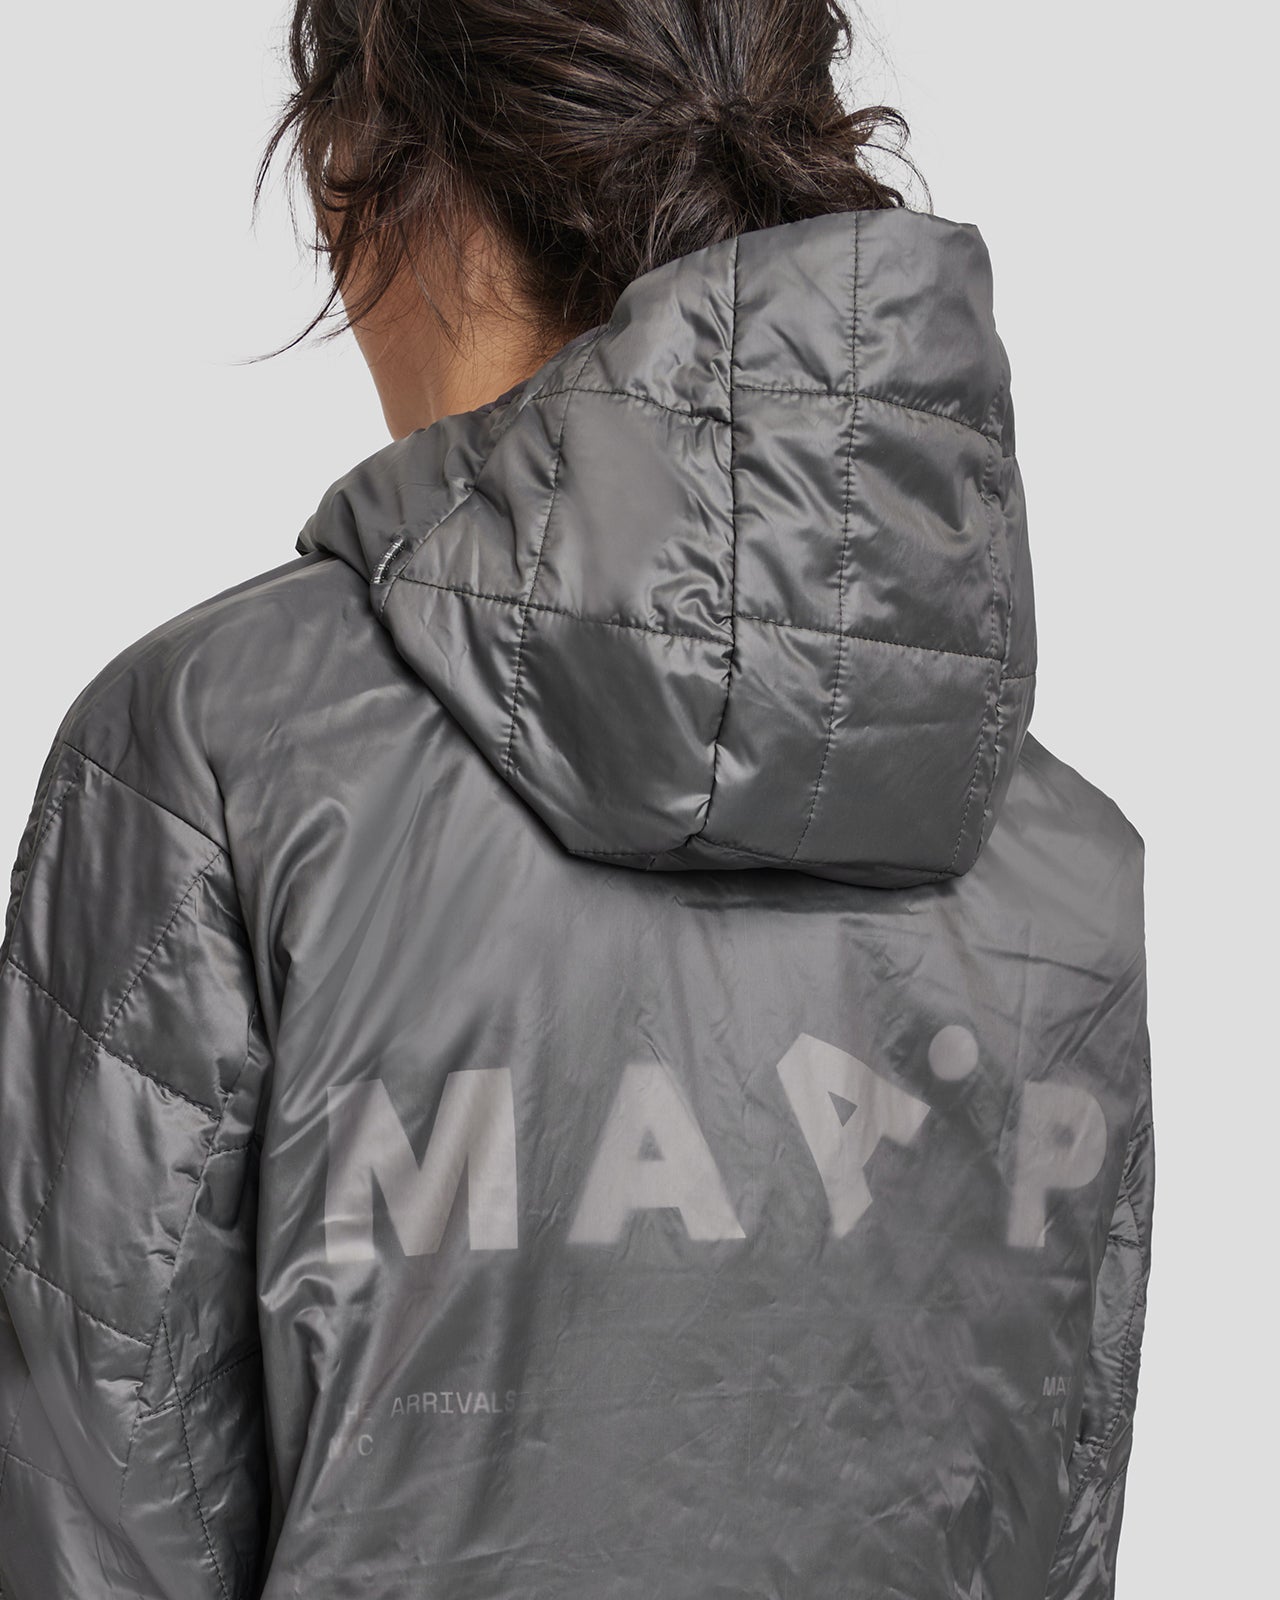 The Arrivals + MAAP Alt_Road Women's Haelo Packable Jacket - MAAP 